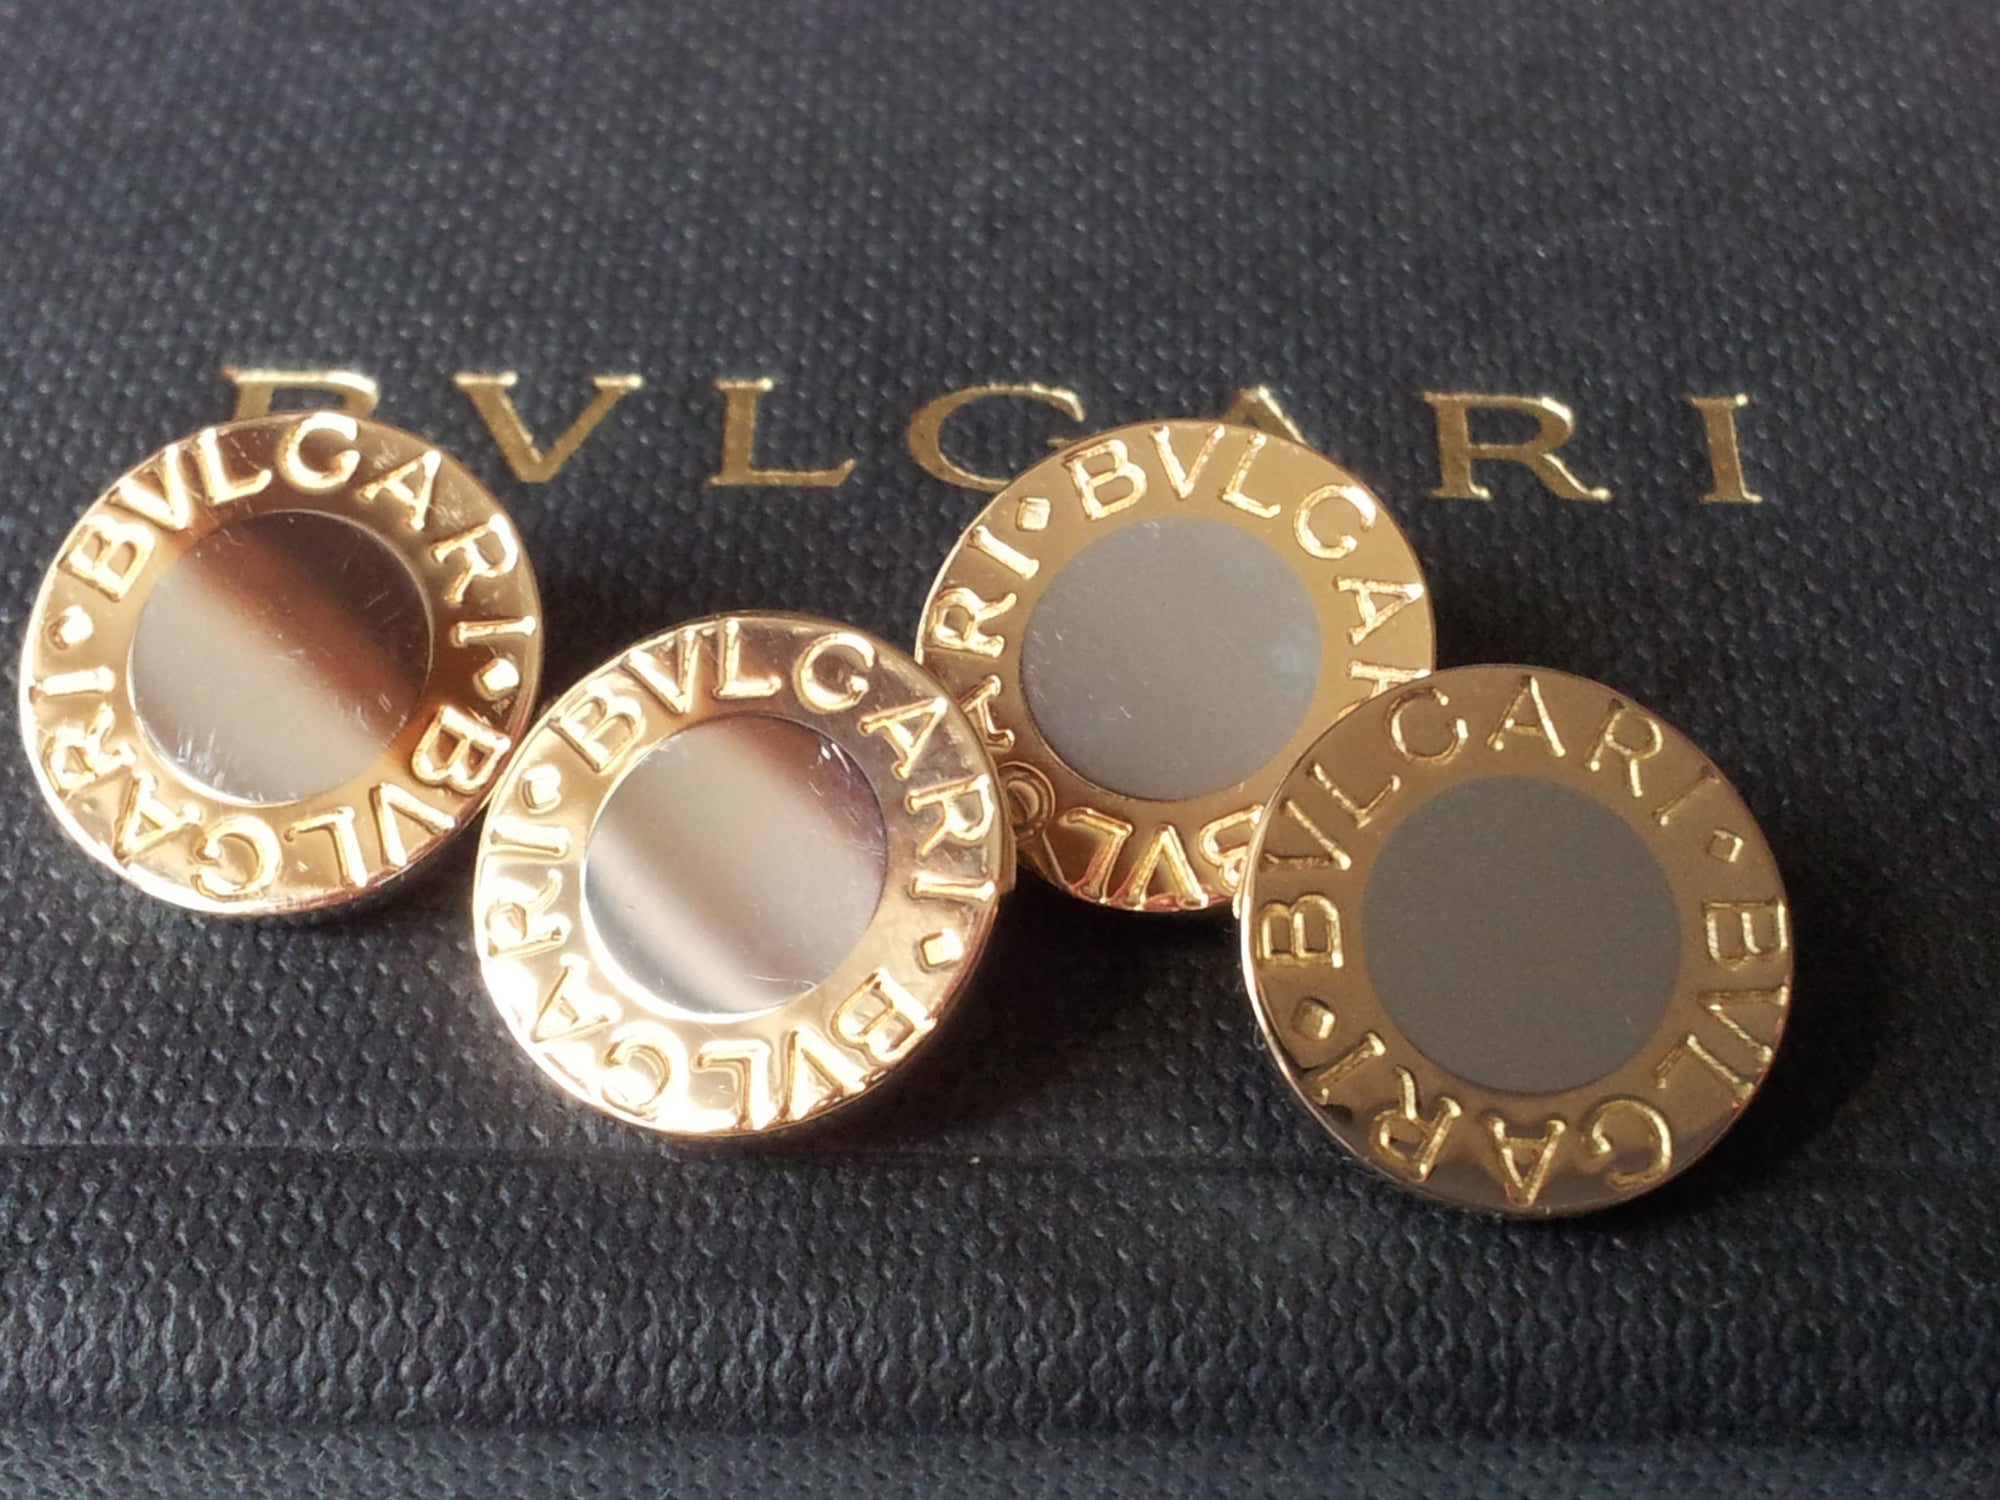 Bulgari Bvlgari 18K Gold/Stainless Steel Bi Colour Cufflinks Mint Condition